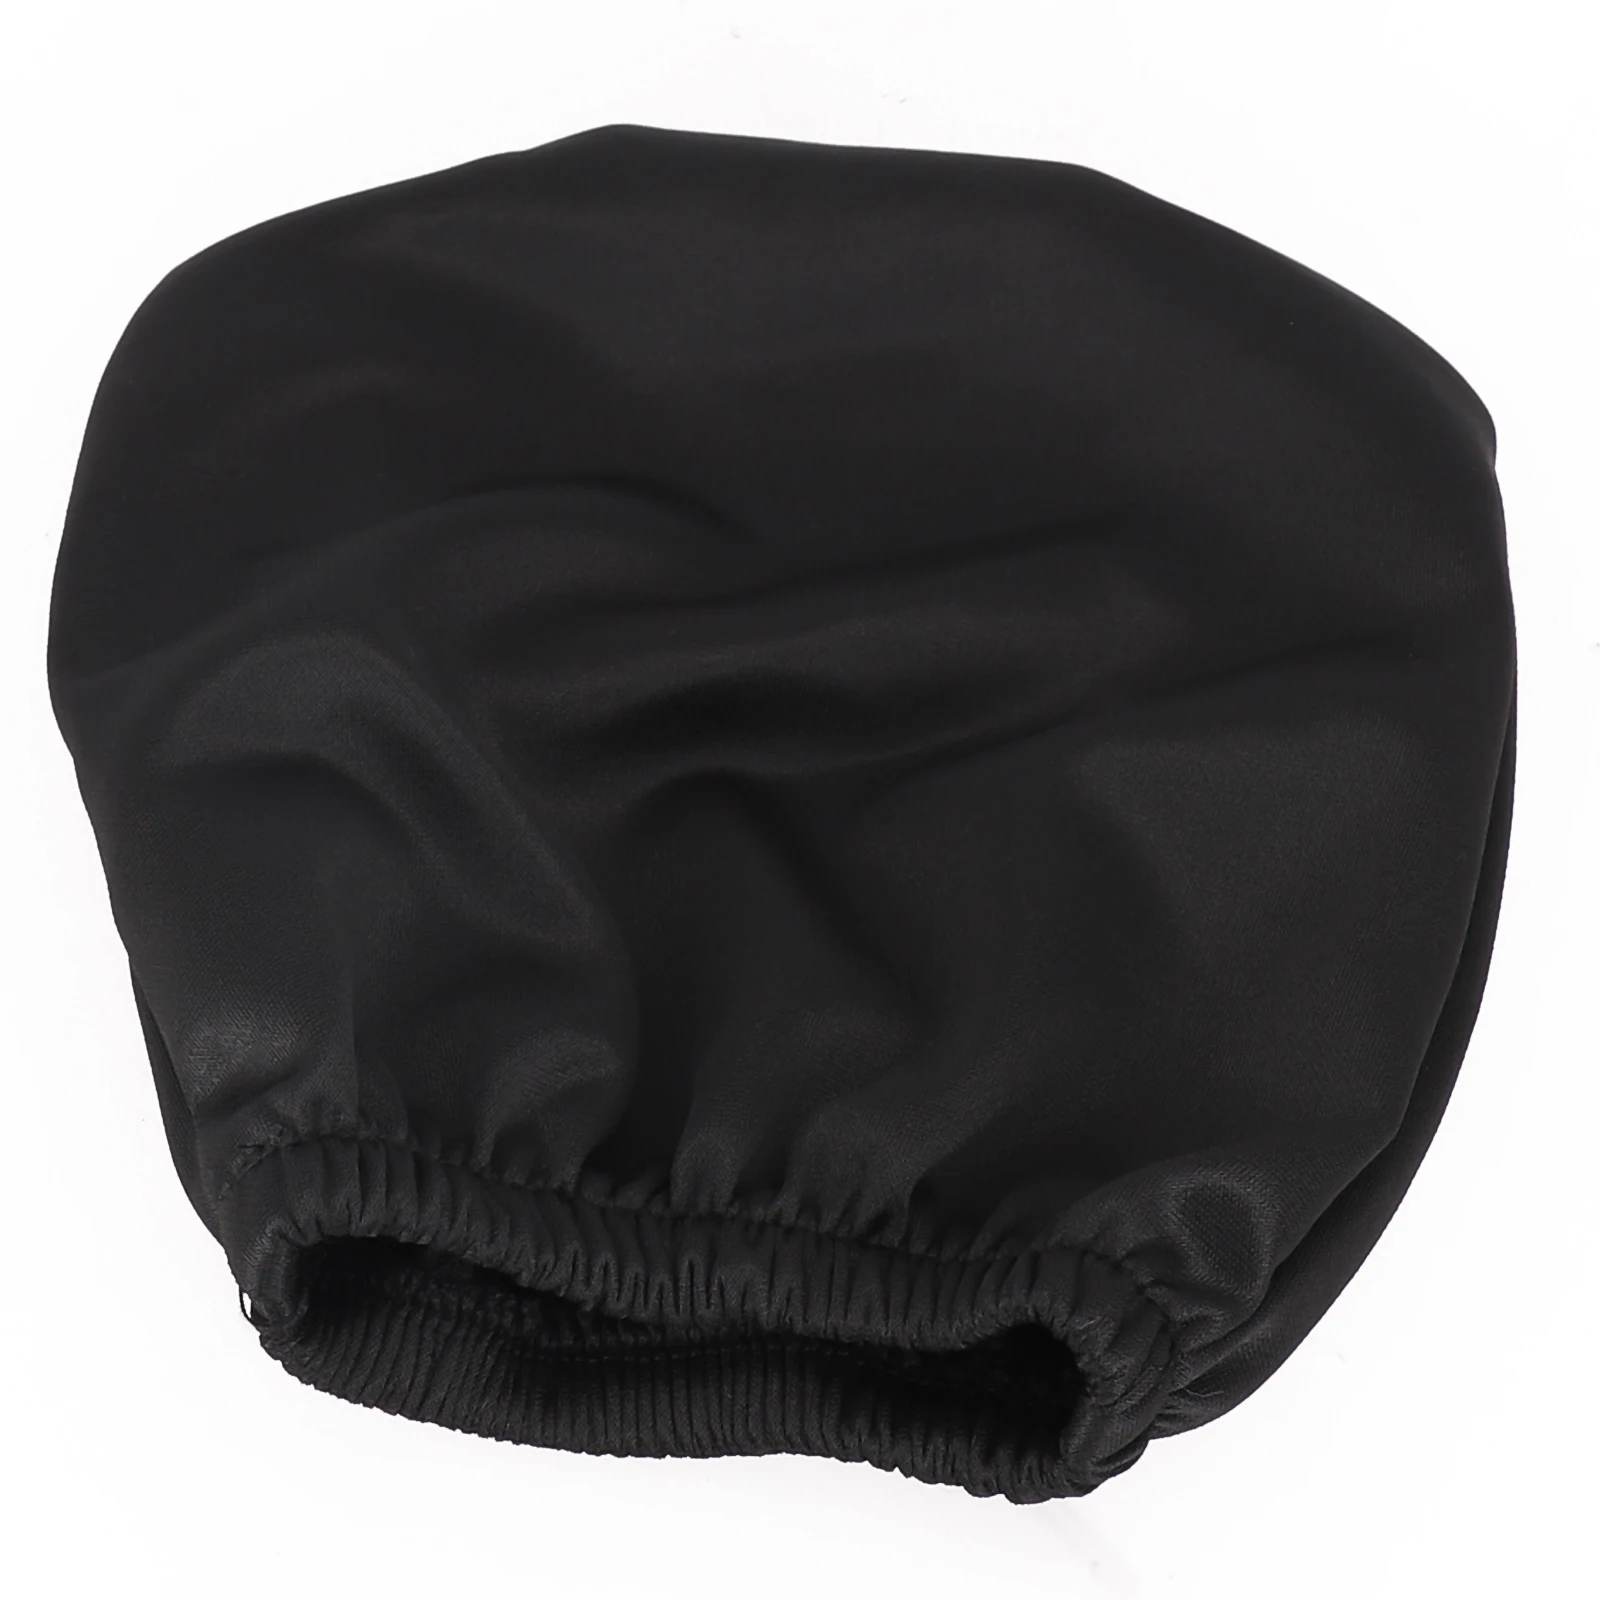 

1PC Premium Cloth Headrest Cover Fits For Car Truck SUV Head Rest Protective Cover Universal Auto Car Interior Accessories